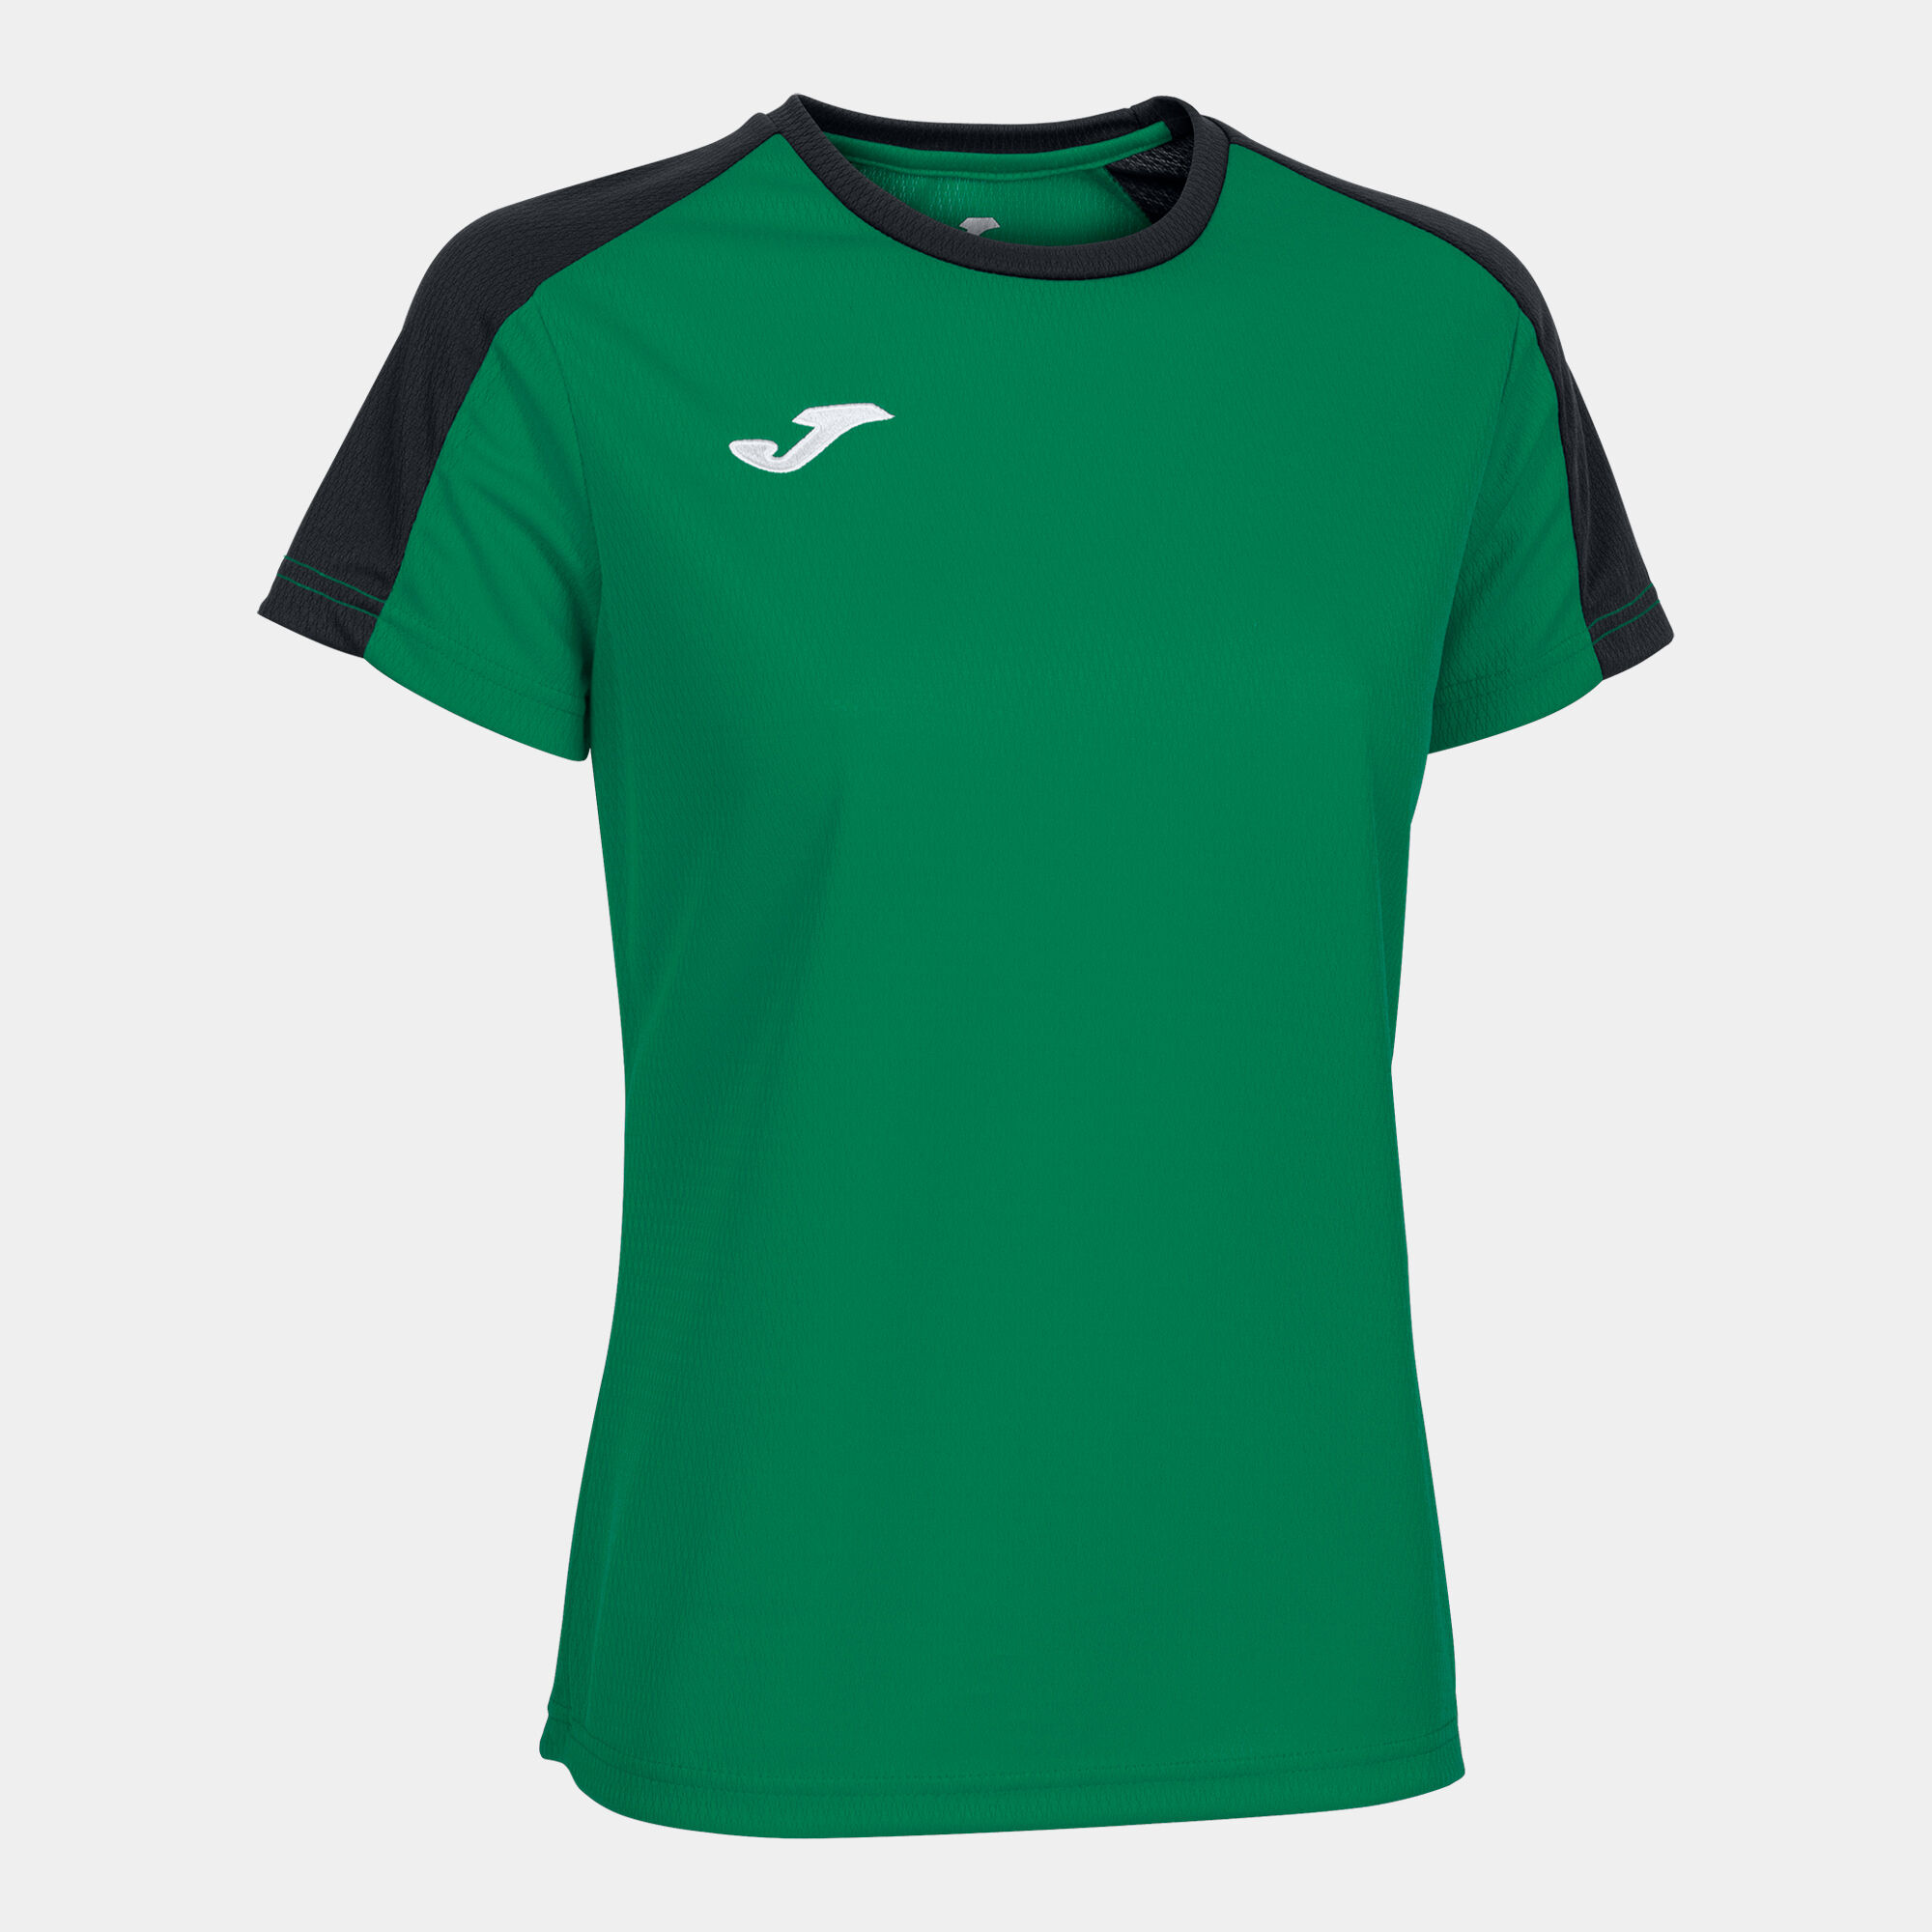 T-shirt manga curta mulher Eco Championship verde preto